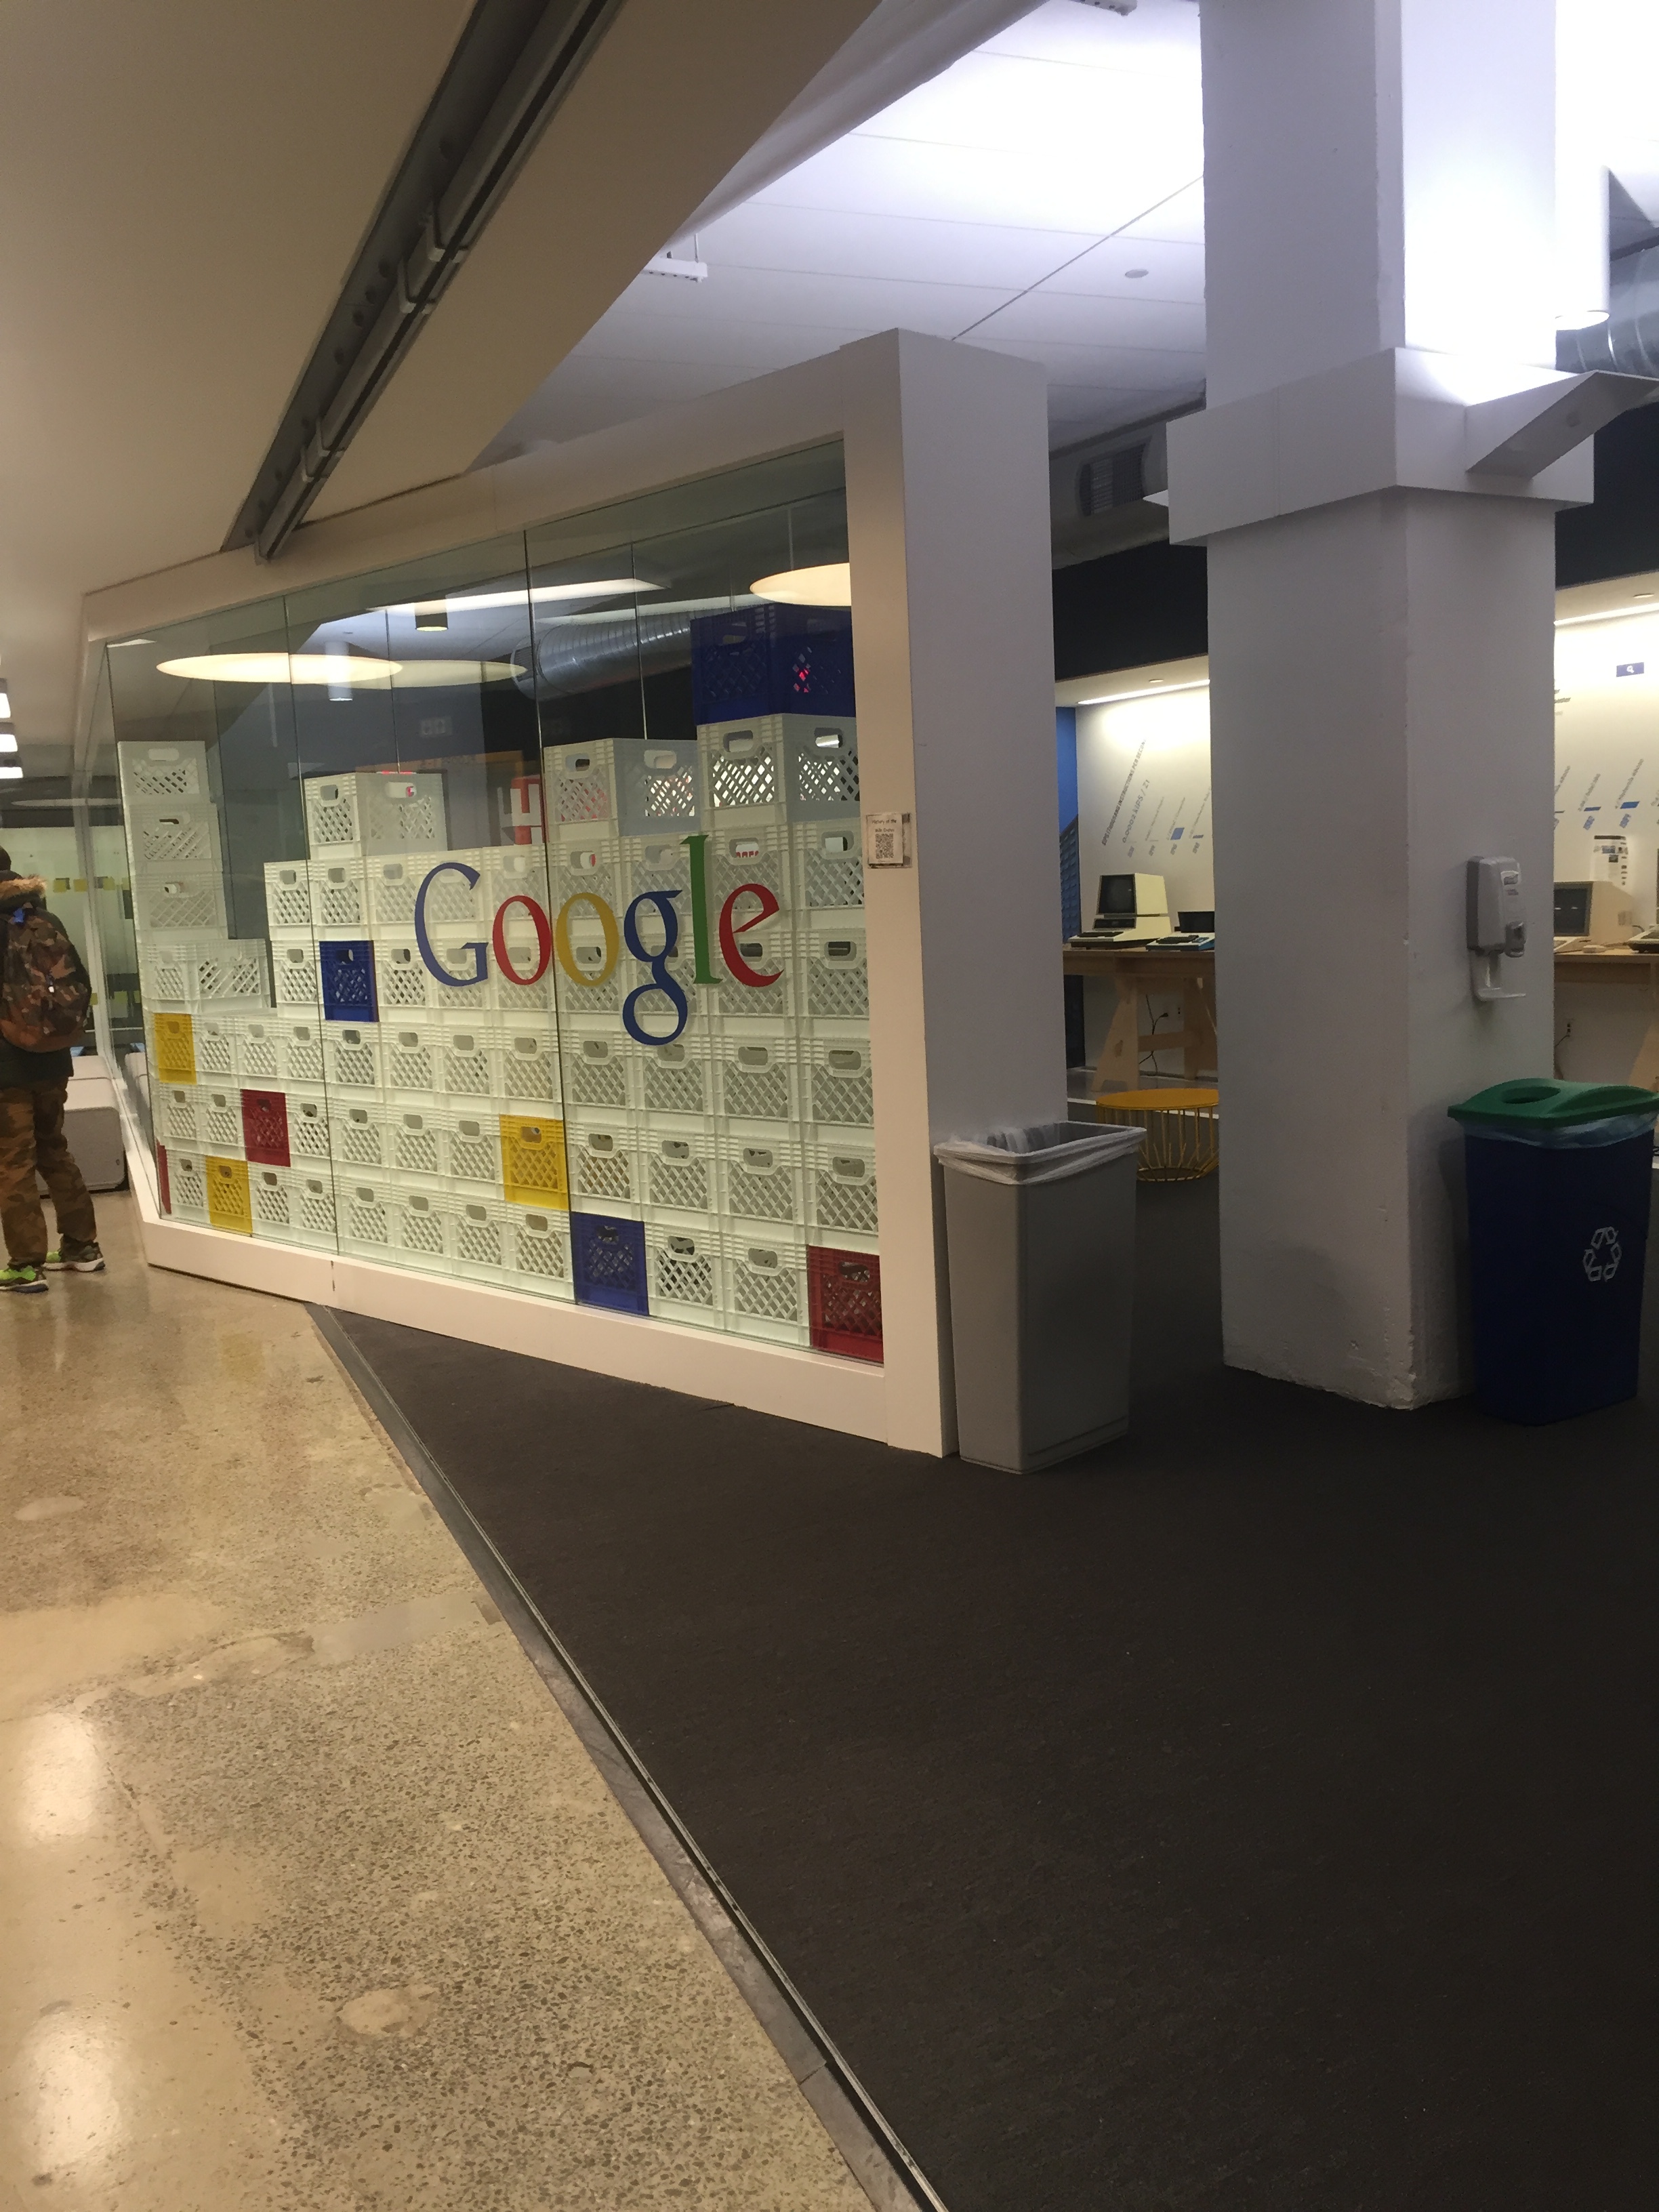  Google's Innovative Office Space 